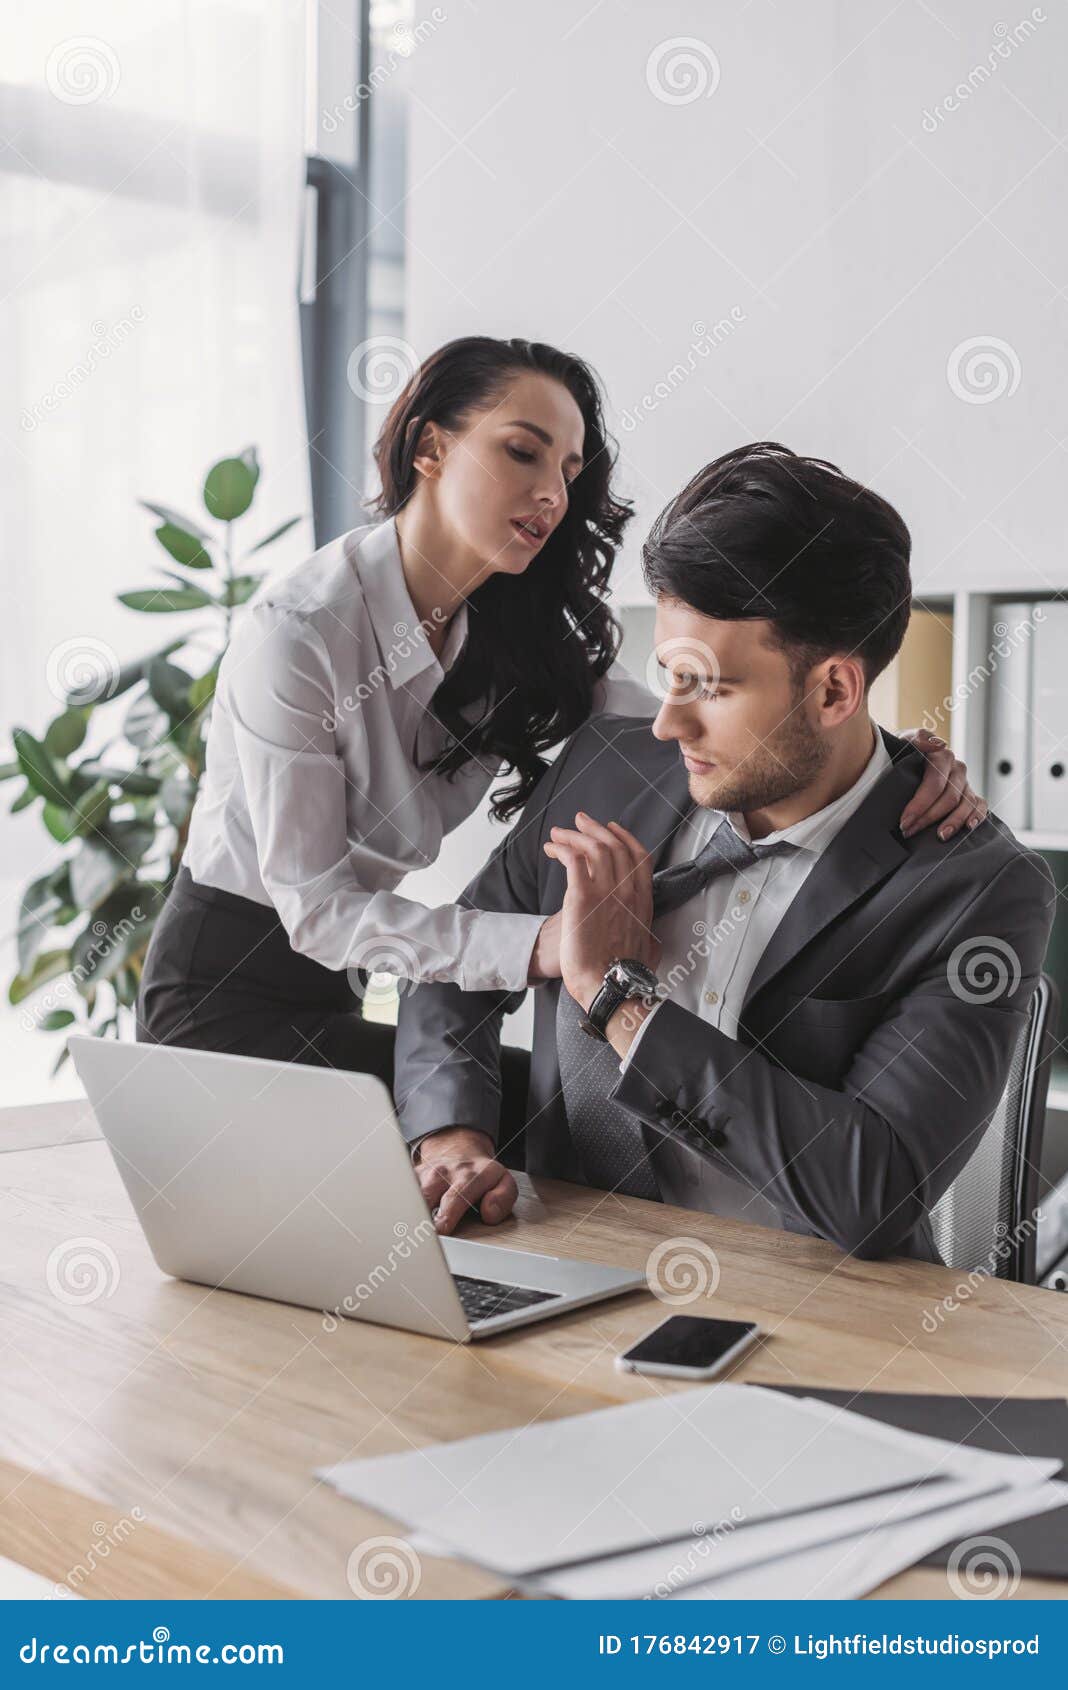 Secretary Hugging Handsome Boss while Seducing Stock Image